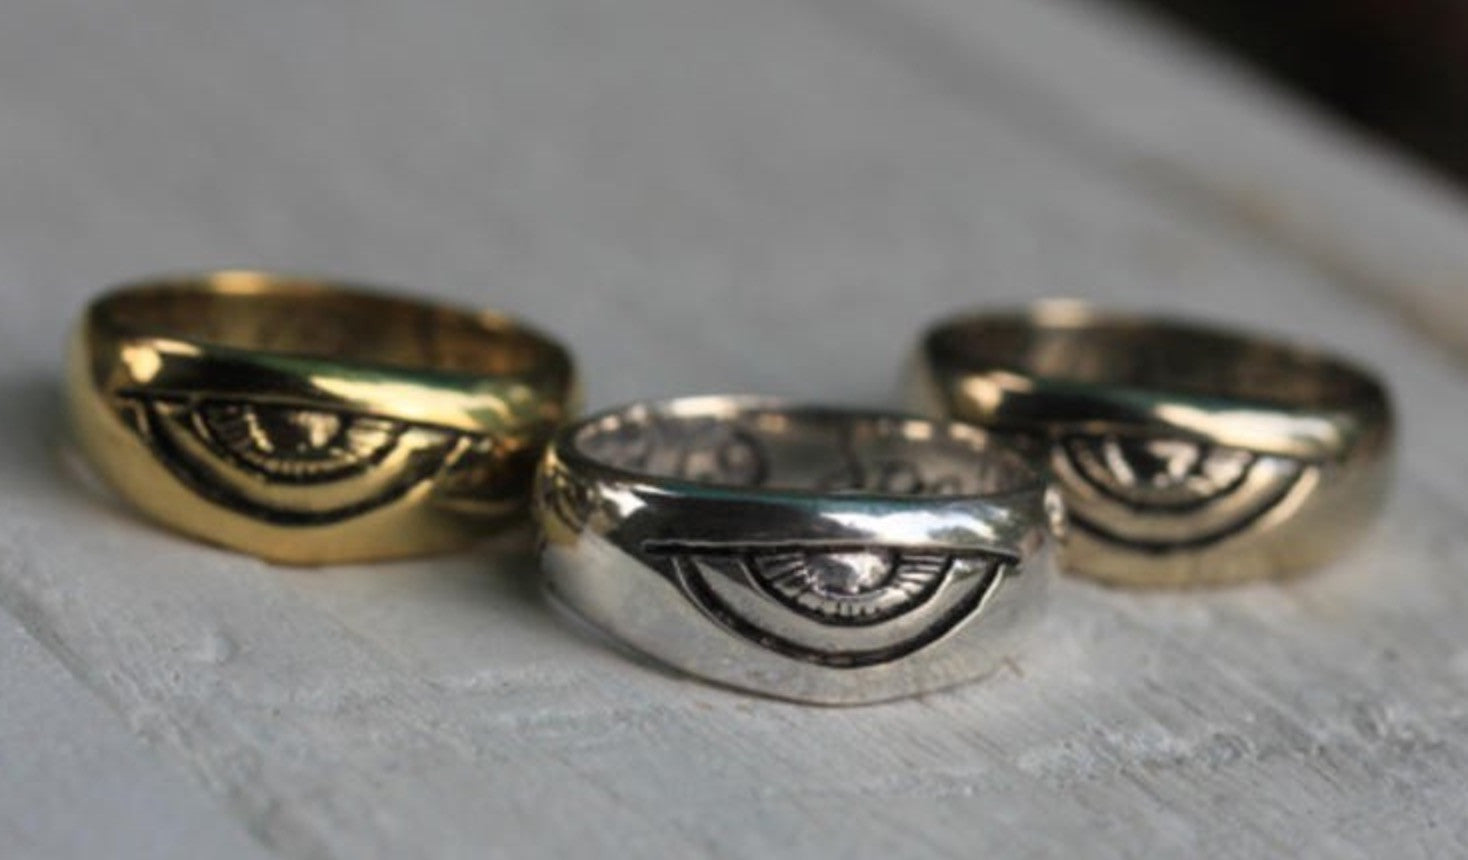 Bahgsu Men's Eye Ring Featured in Men's Health